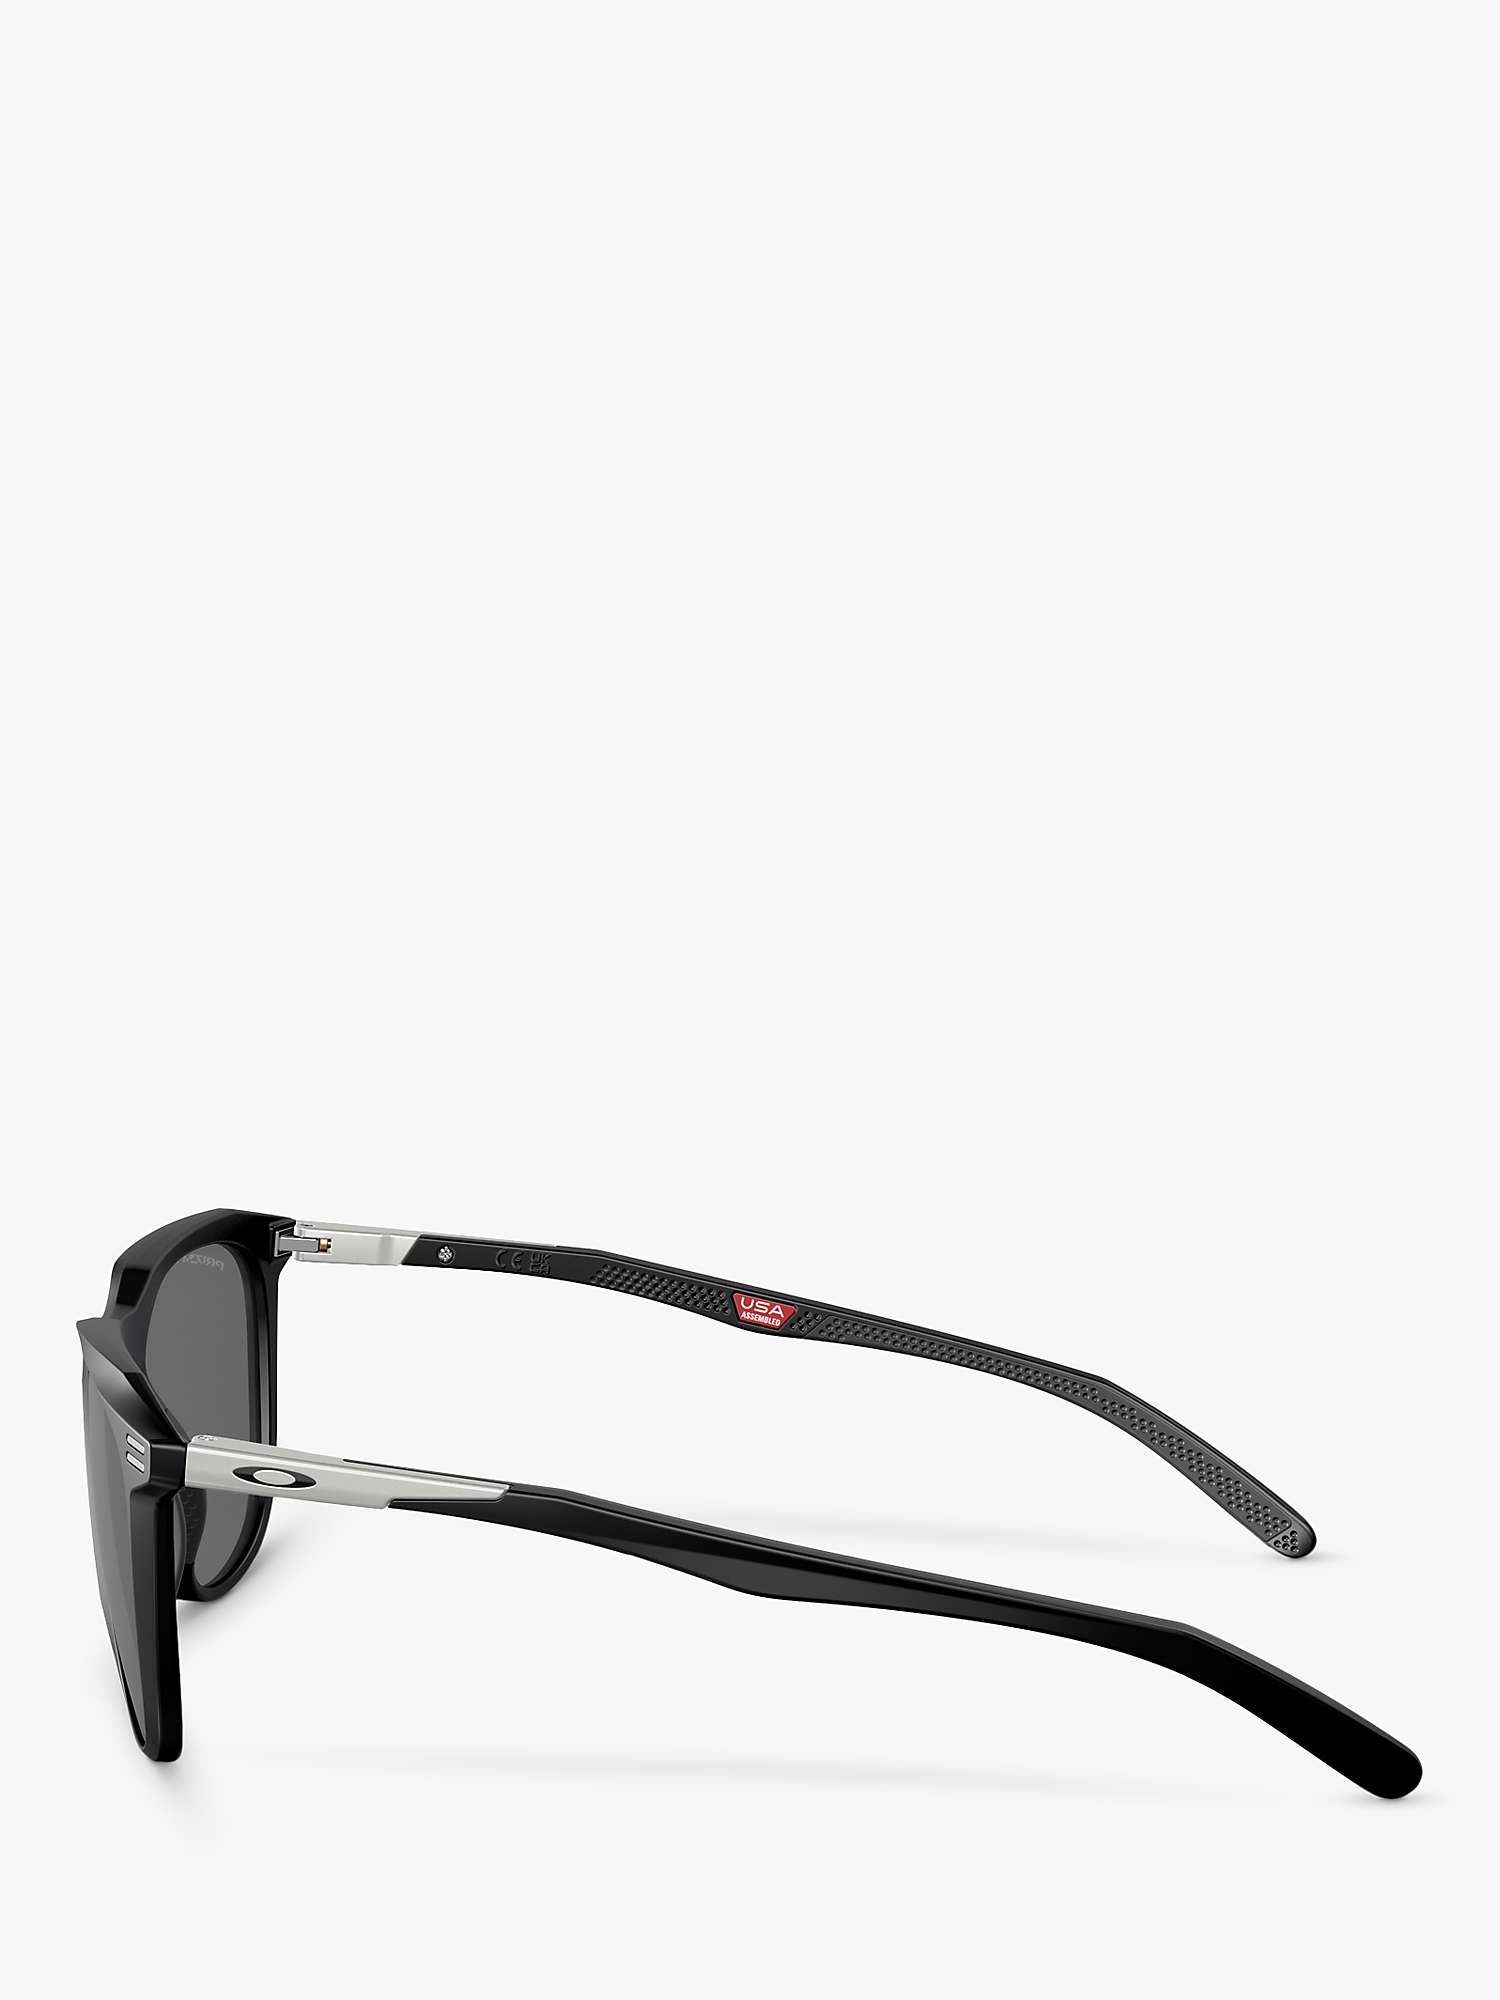 Buy Oakley OO9286 Men's Polarised D-Frame Sunglasses, Matte Black/Grey Online at johnlewis.com